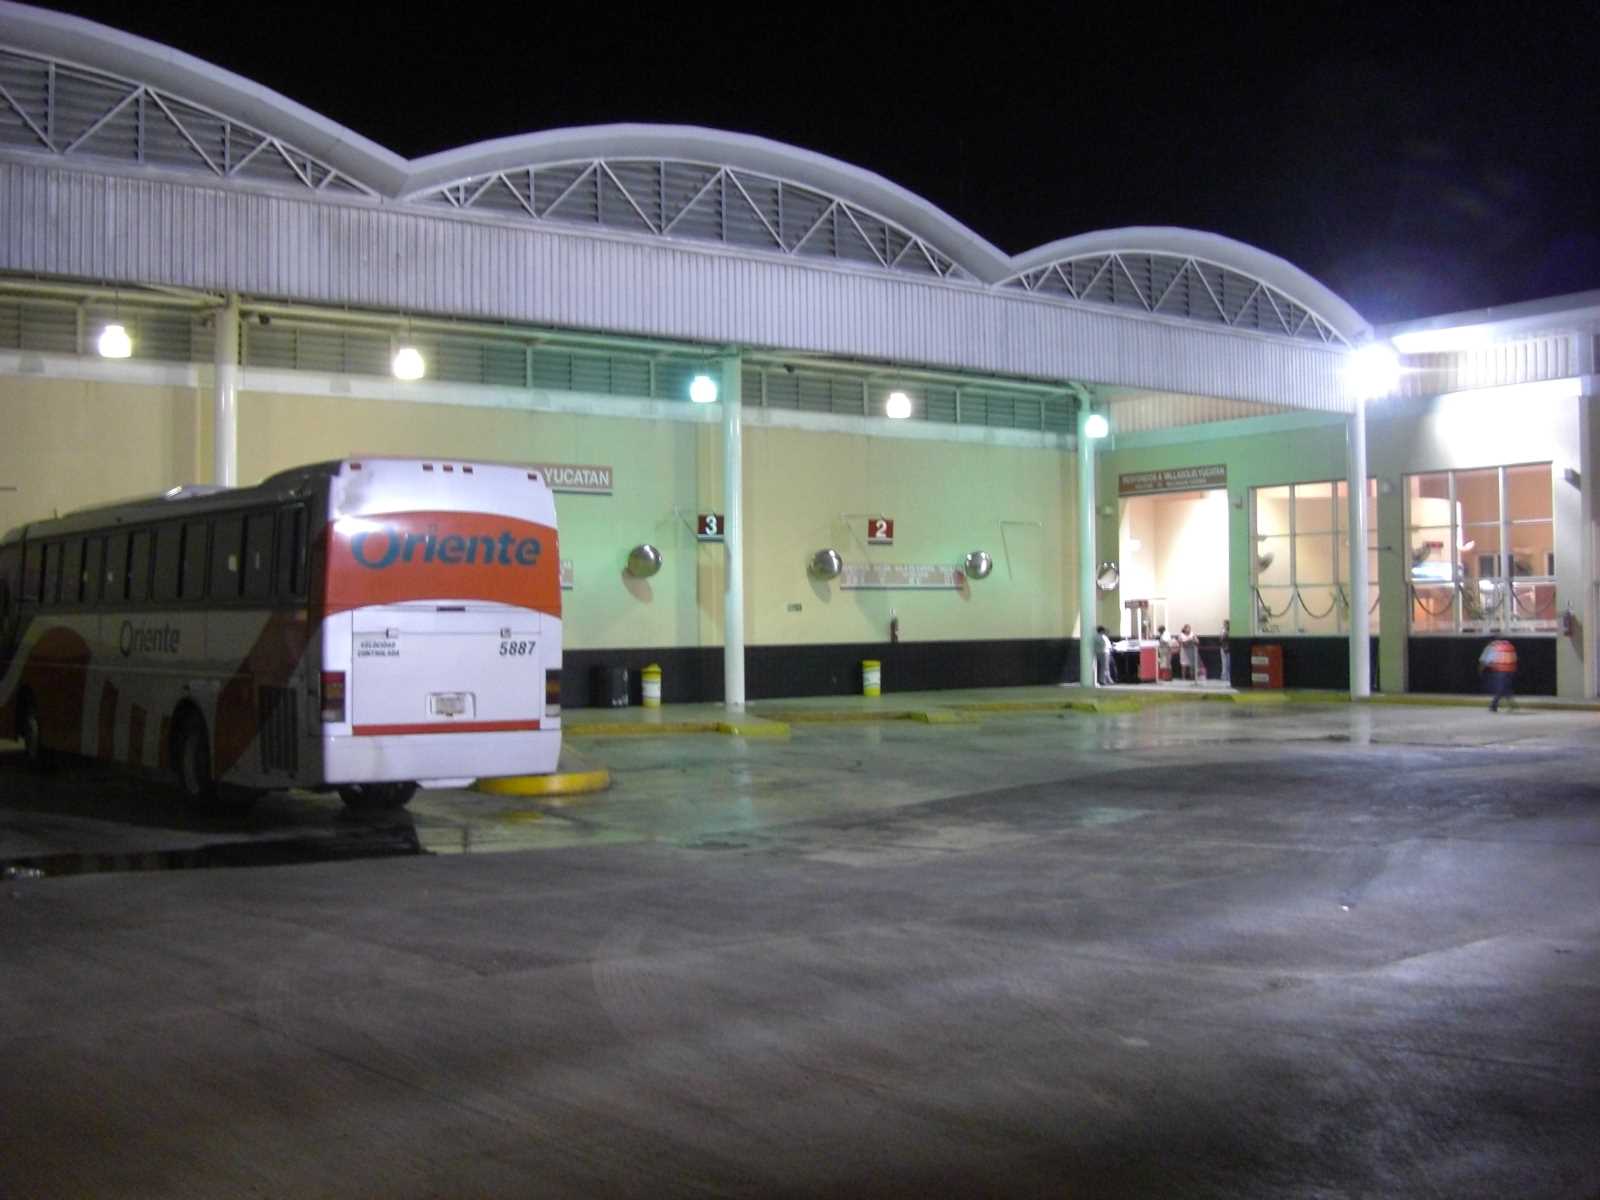 CIMG17
71 bus depot
